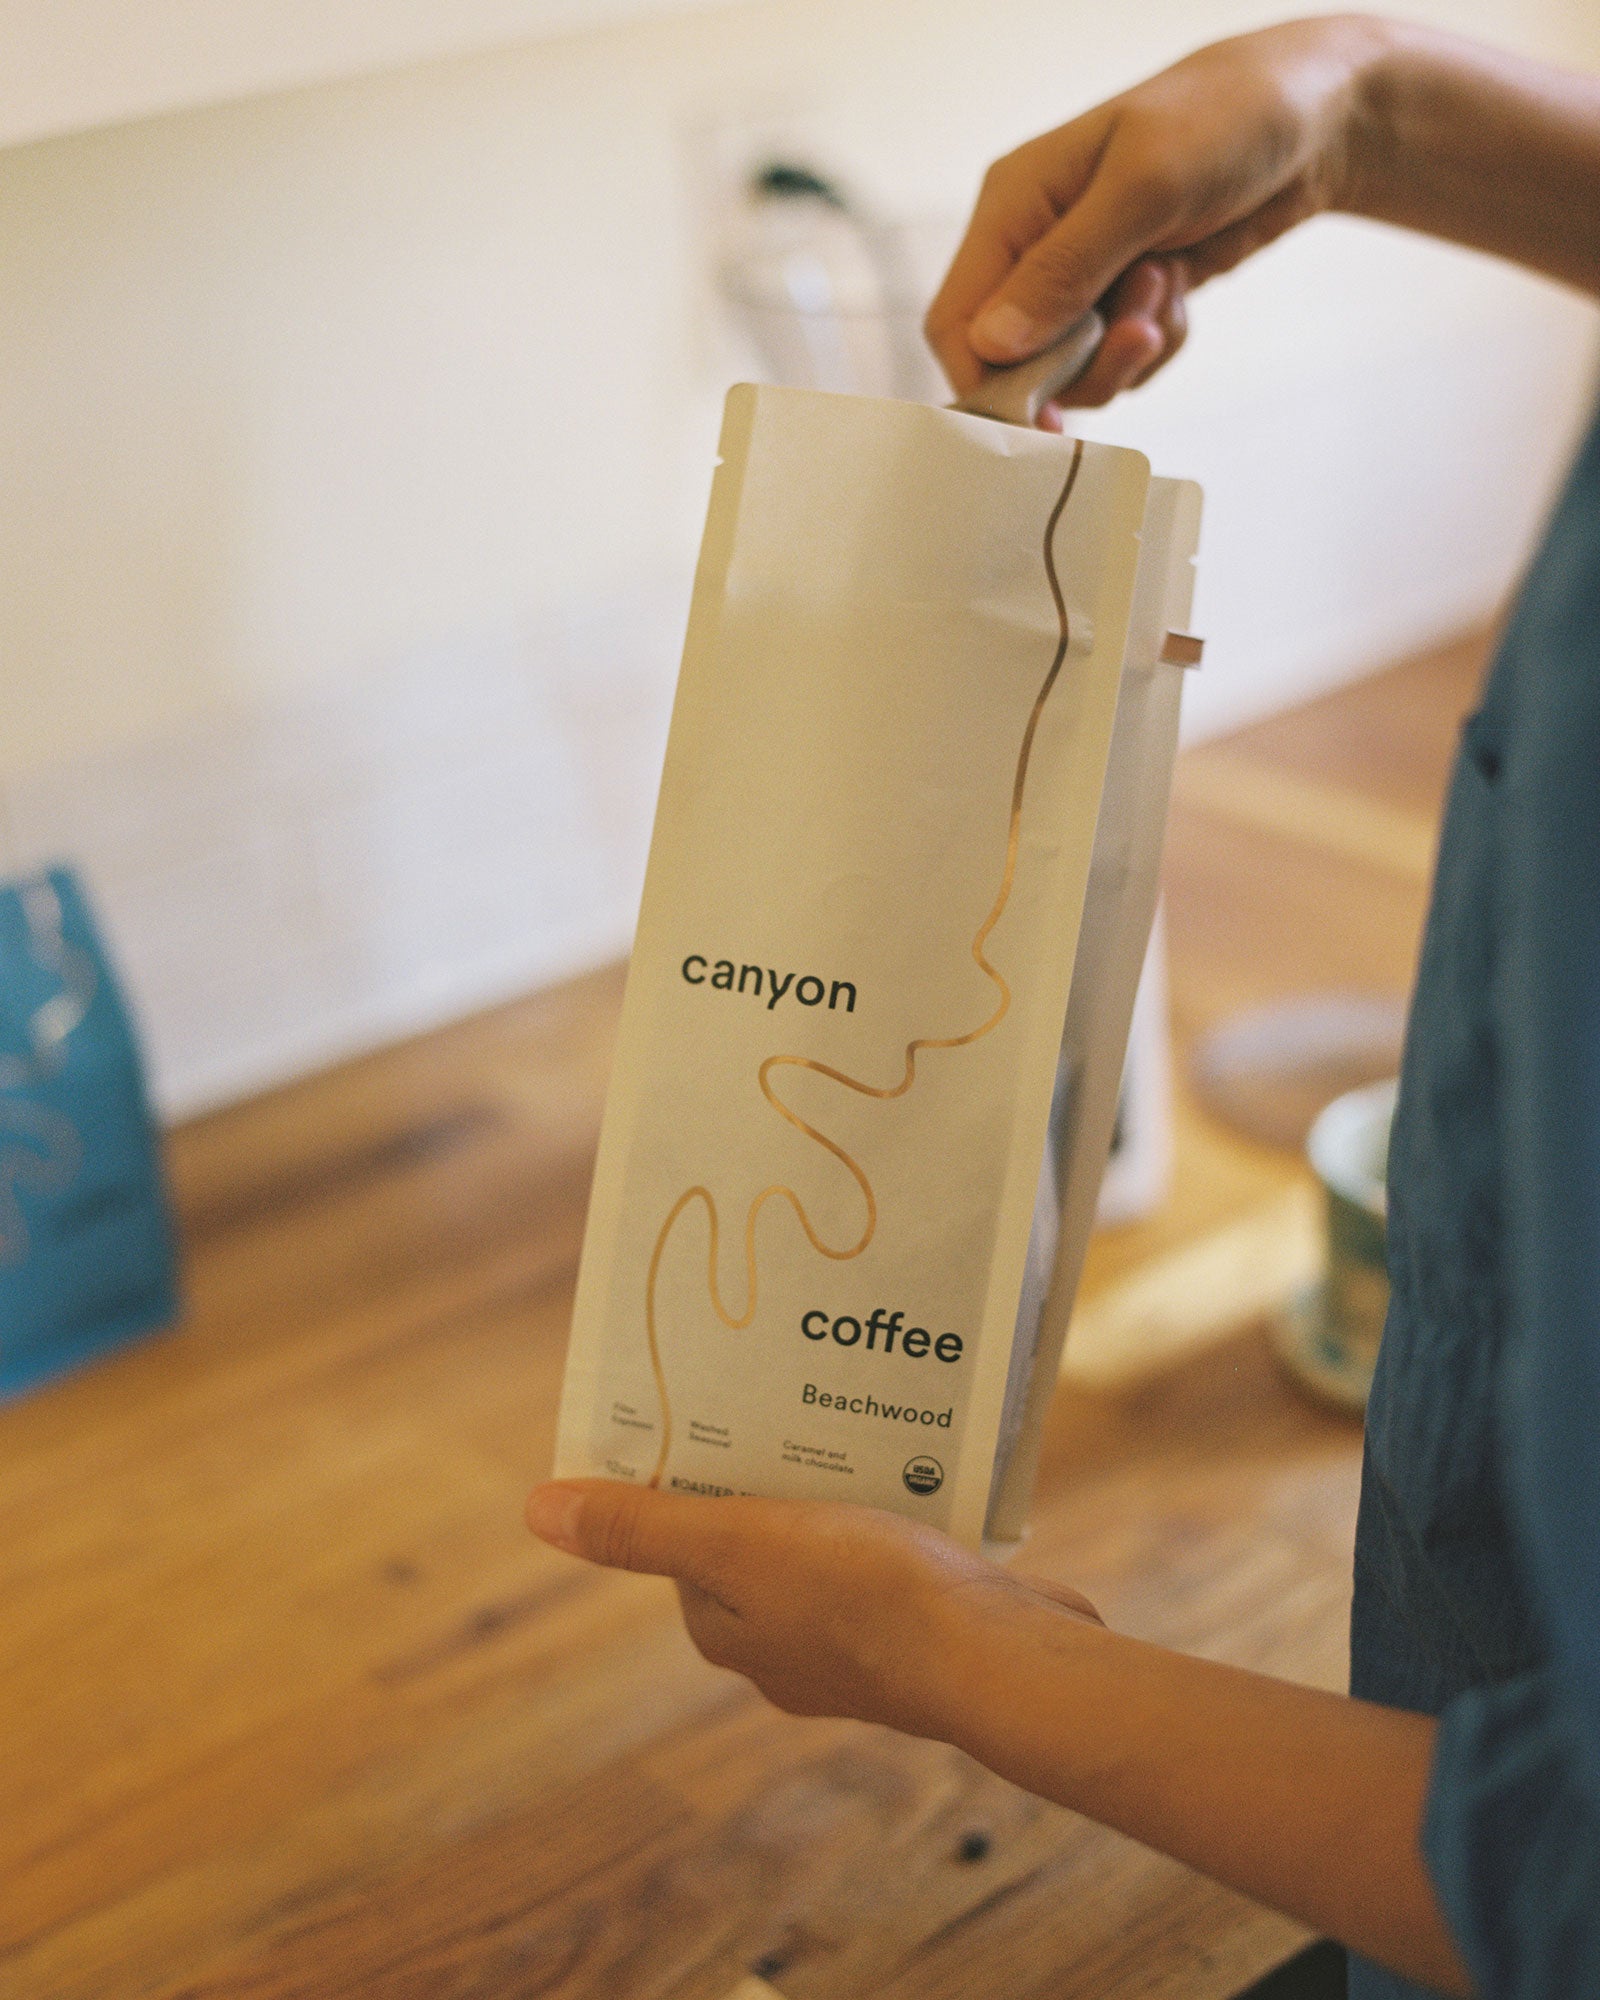 A white bag of Beachwood USDA organic coffee by Canyon Coffee 